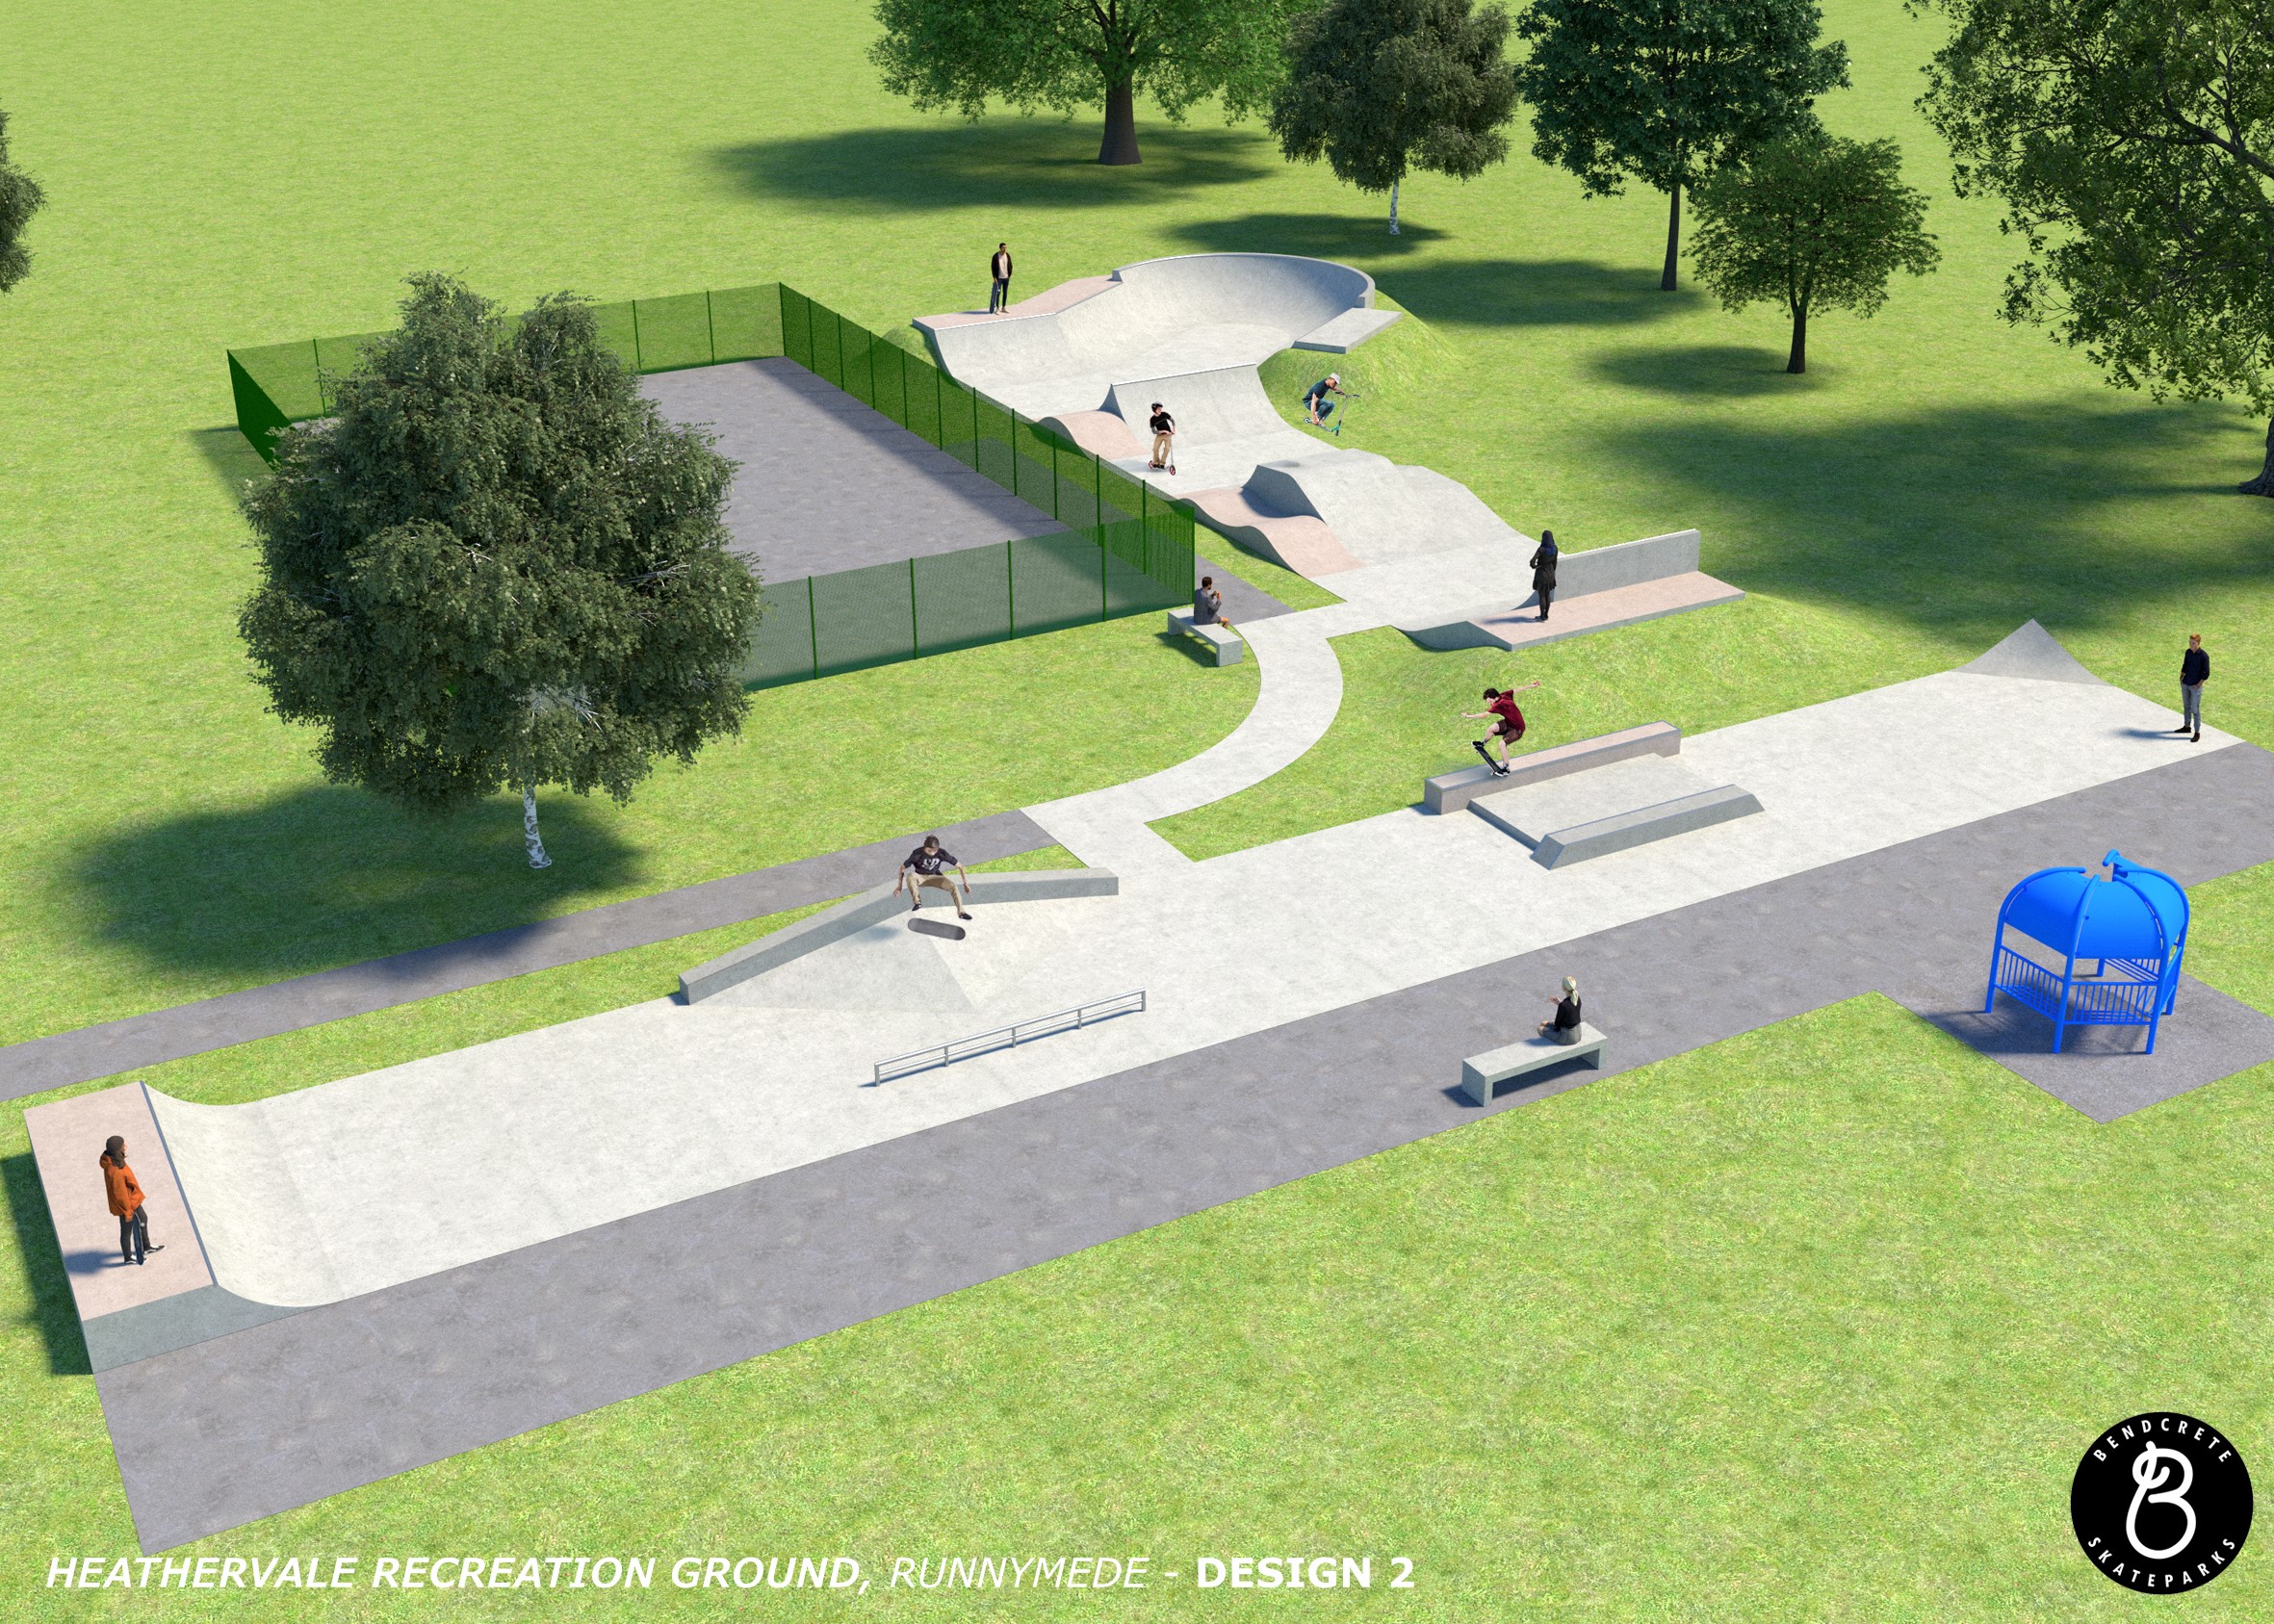 Heathervale Park skate facilities option 2